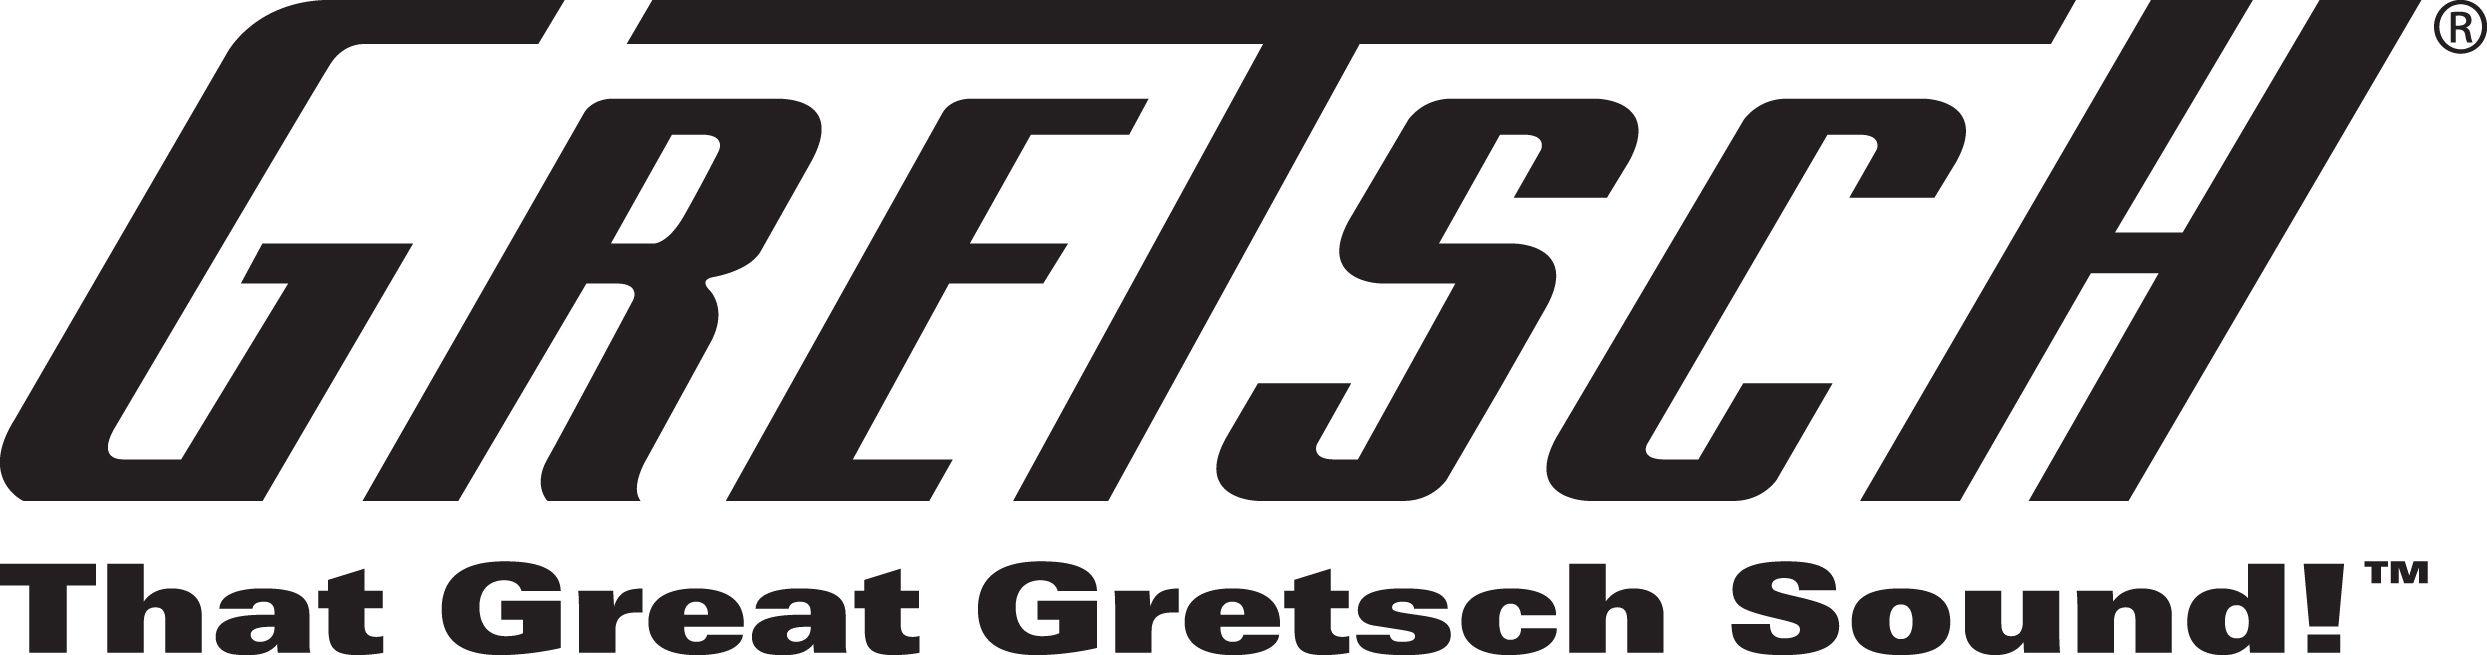 Gretsch Logo - Gretsch Logo Desing | T. i. p. o. g. r. a. f. i. a. s | Guitar logo ...